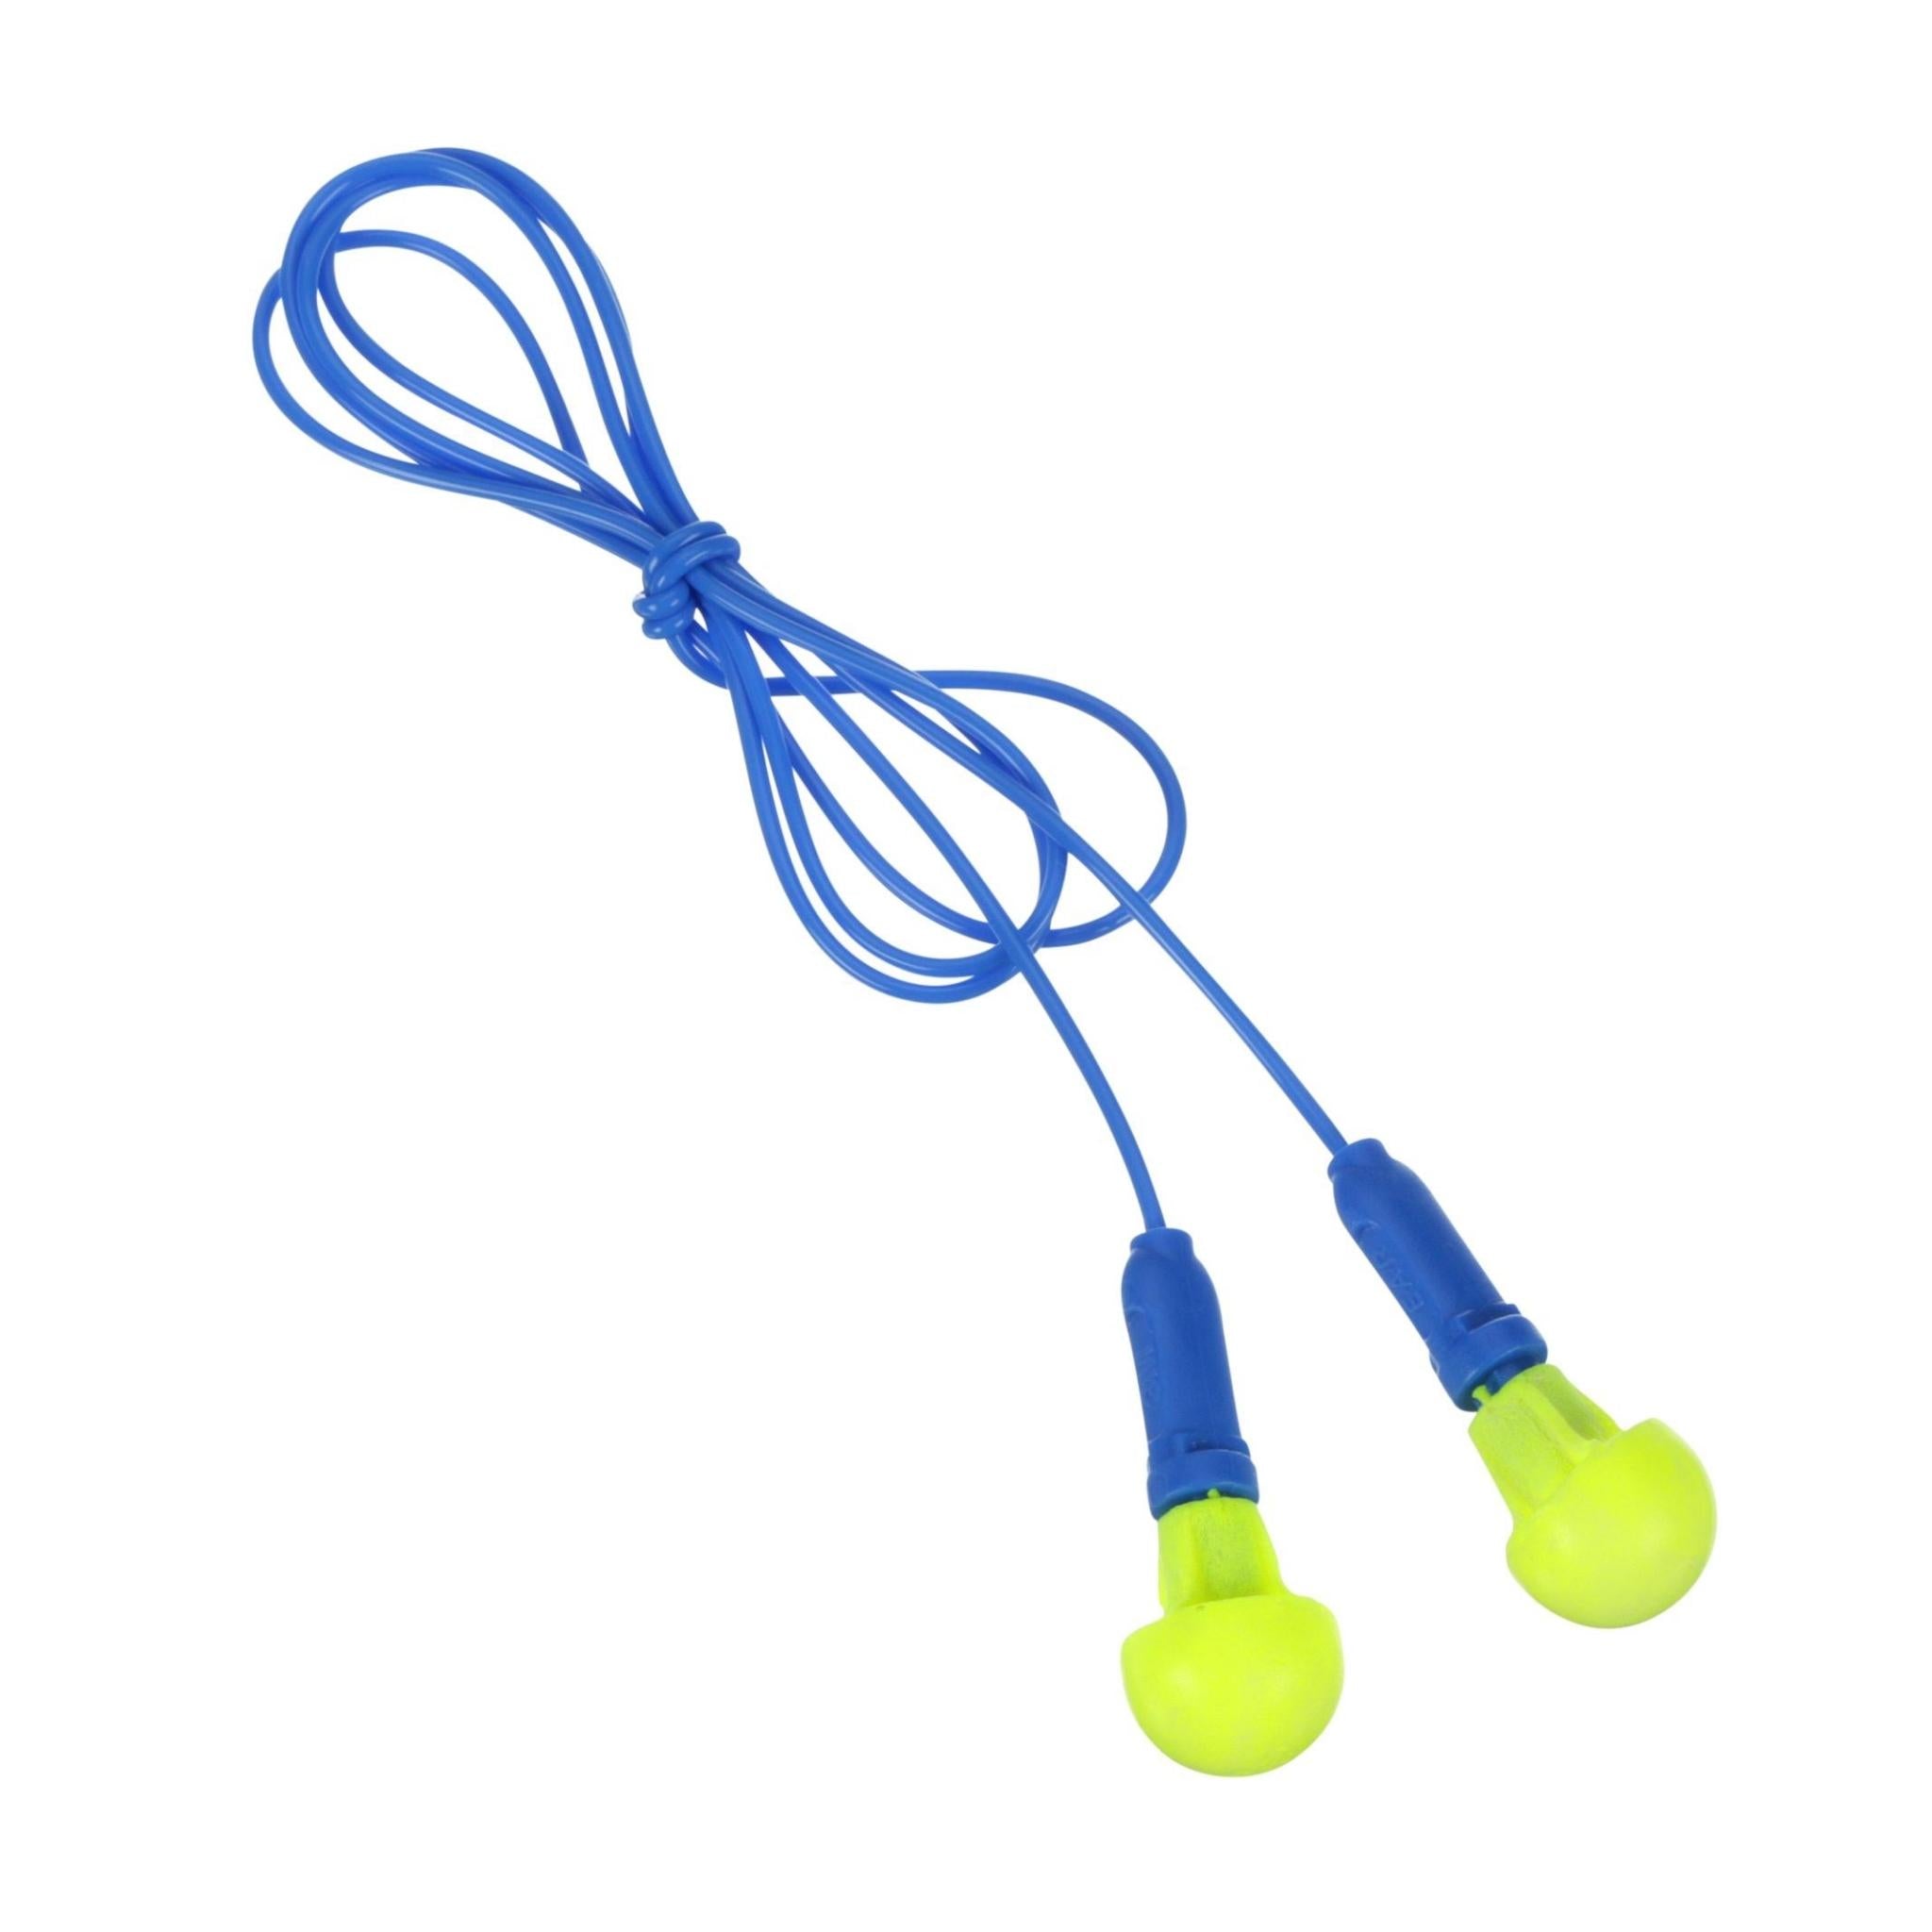 3M™ E-A-R™ Push-Ins™ Earplugs 318-1001, Corded, Poly Bag